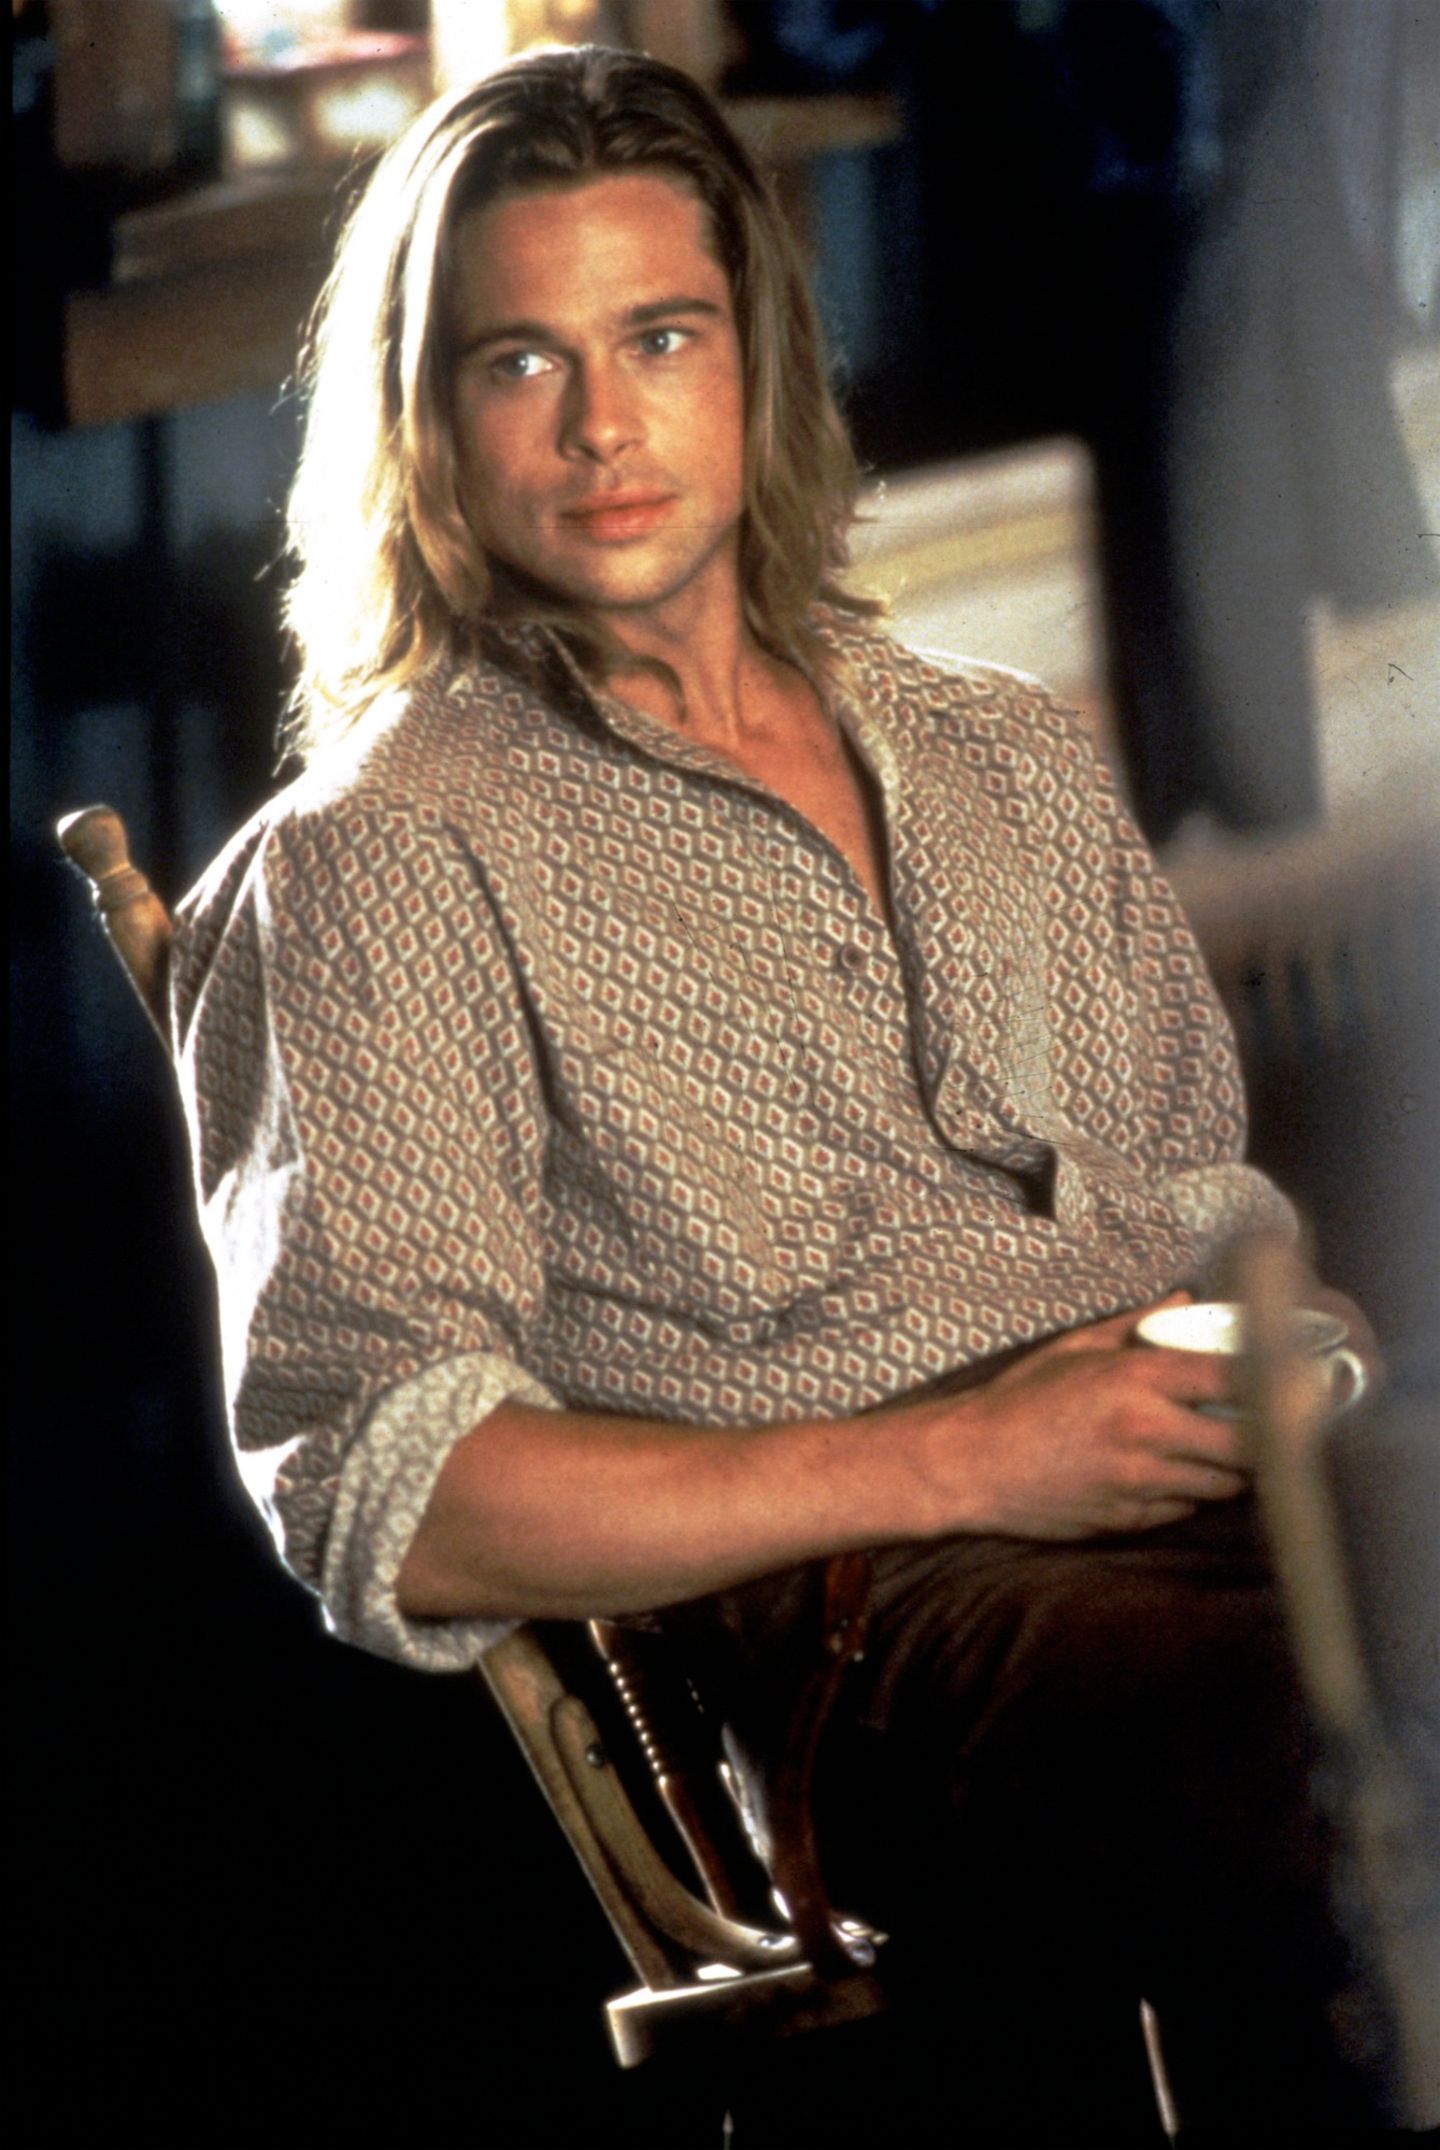 Sexiest Man Alive 1995 - Brad Pitt